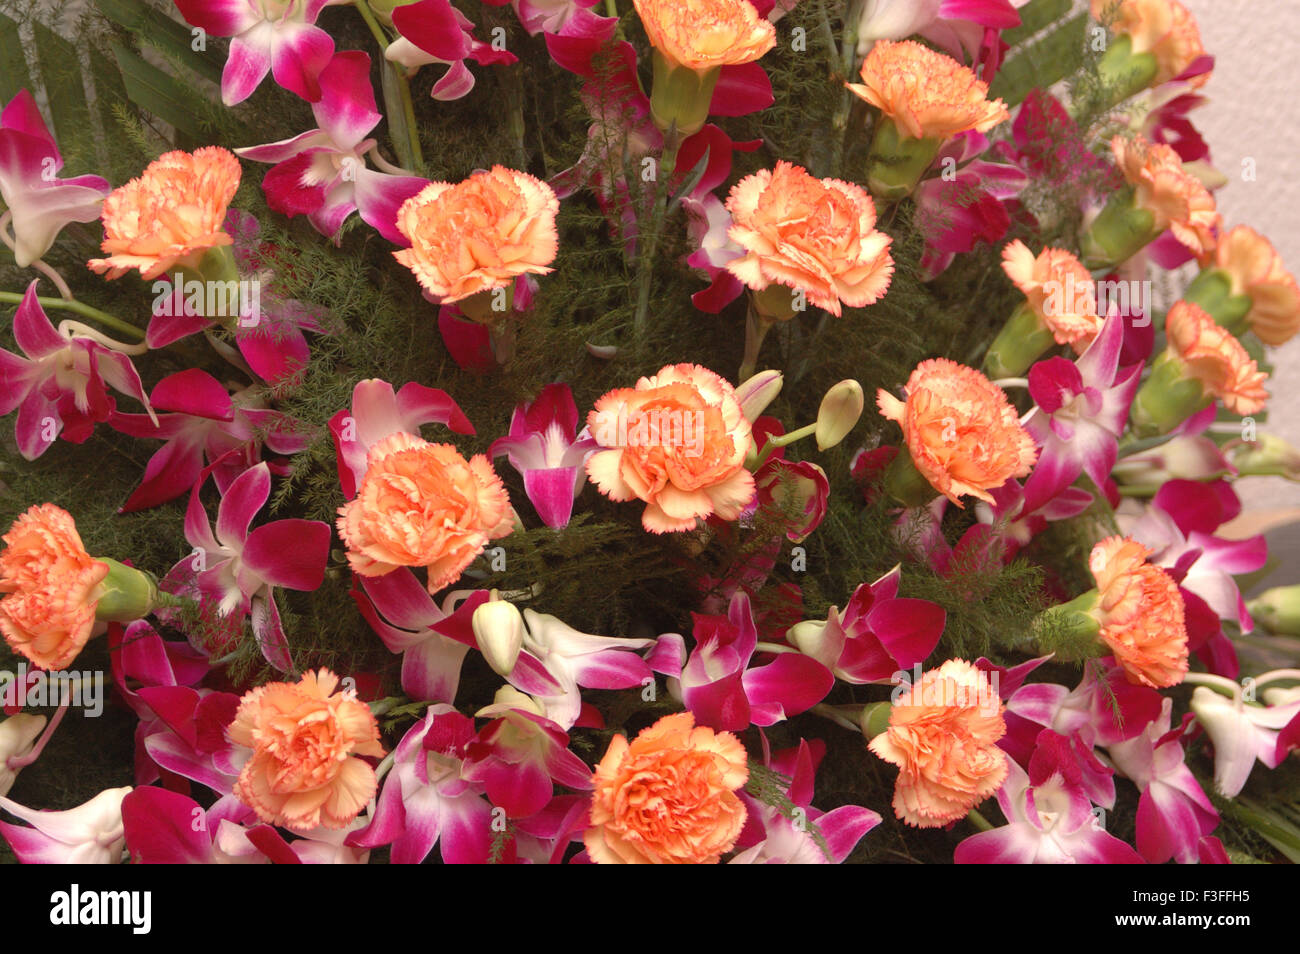 Flowers arrangement, India, Asia Stock Photo